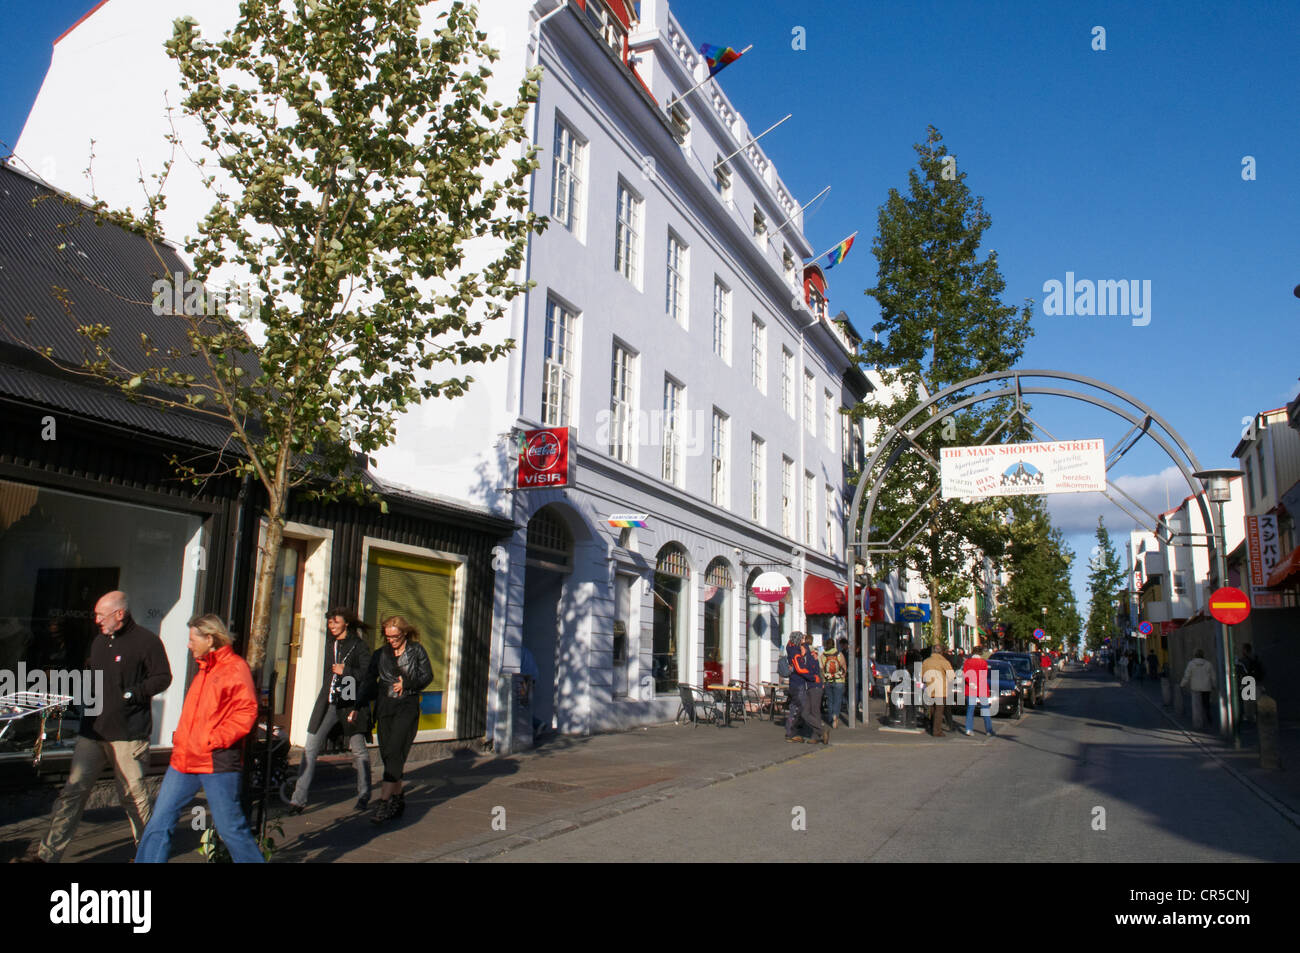 Iceland, Reykjavik, commercial street Bankastraeti Stock Photo